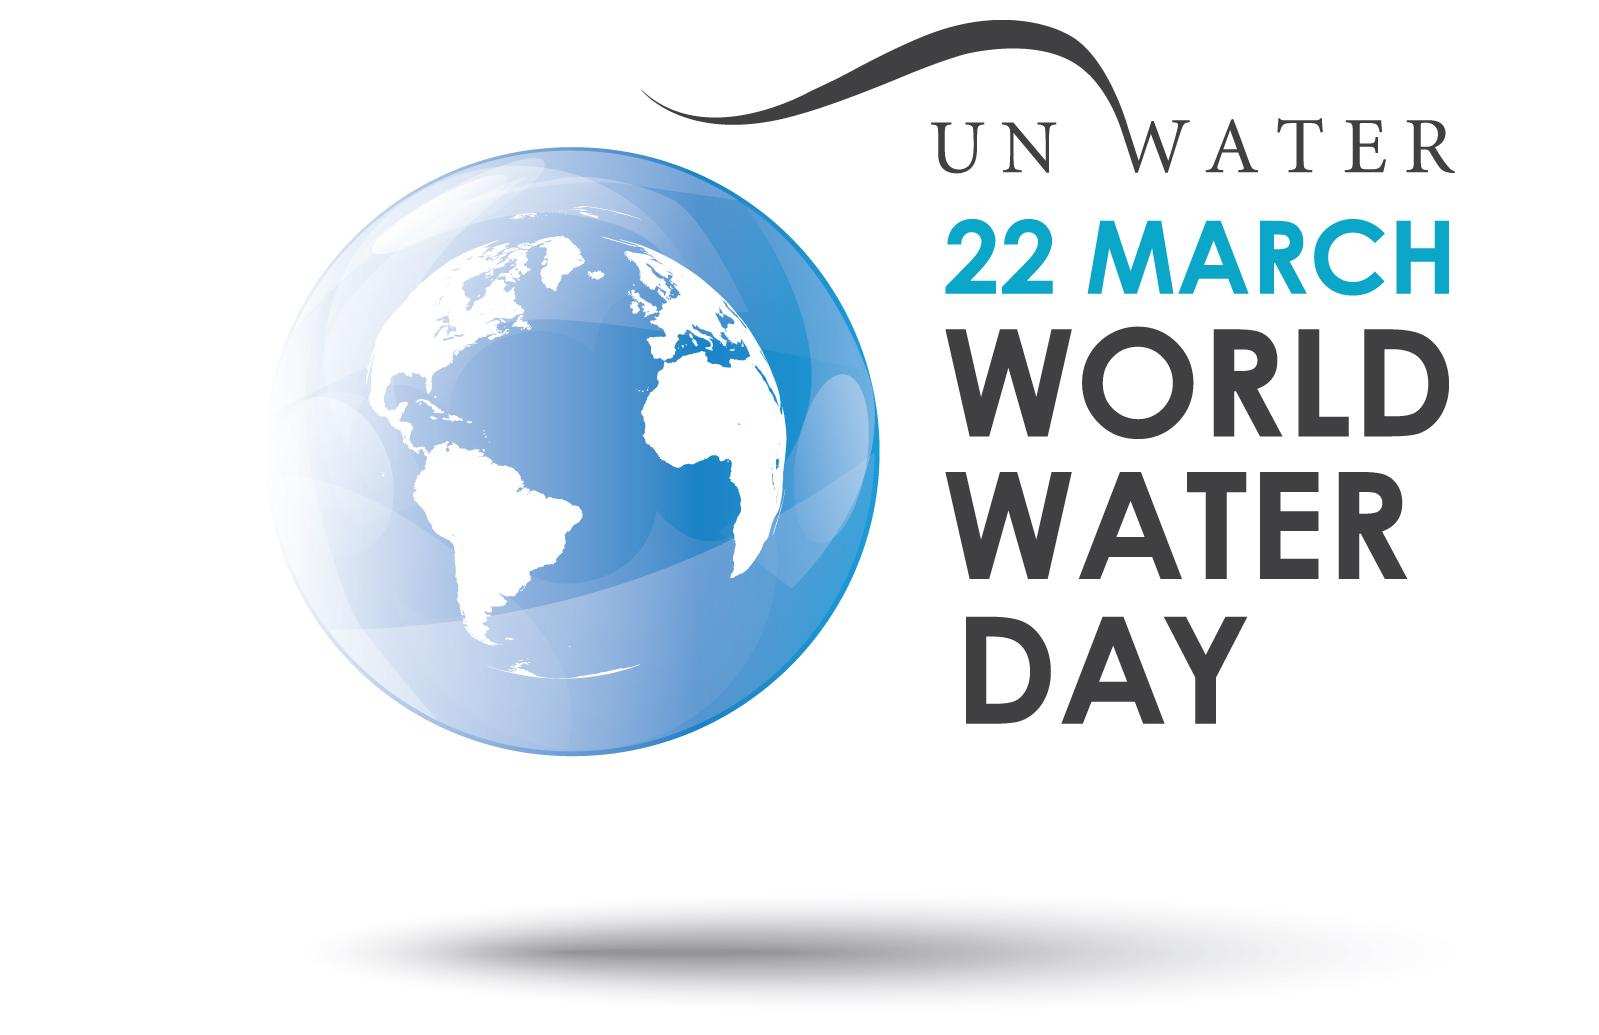 World Water Day 2021